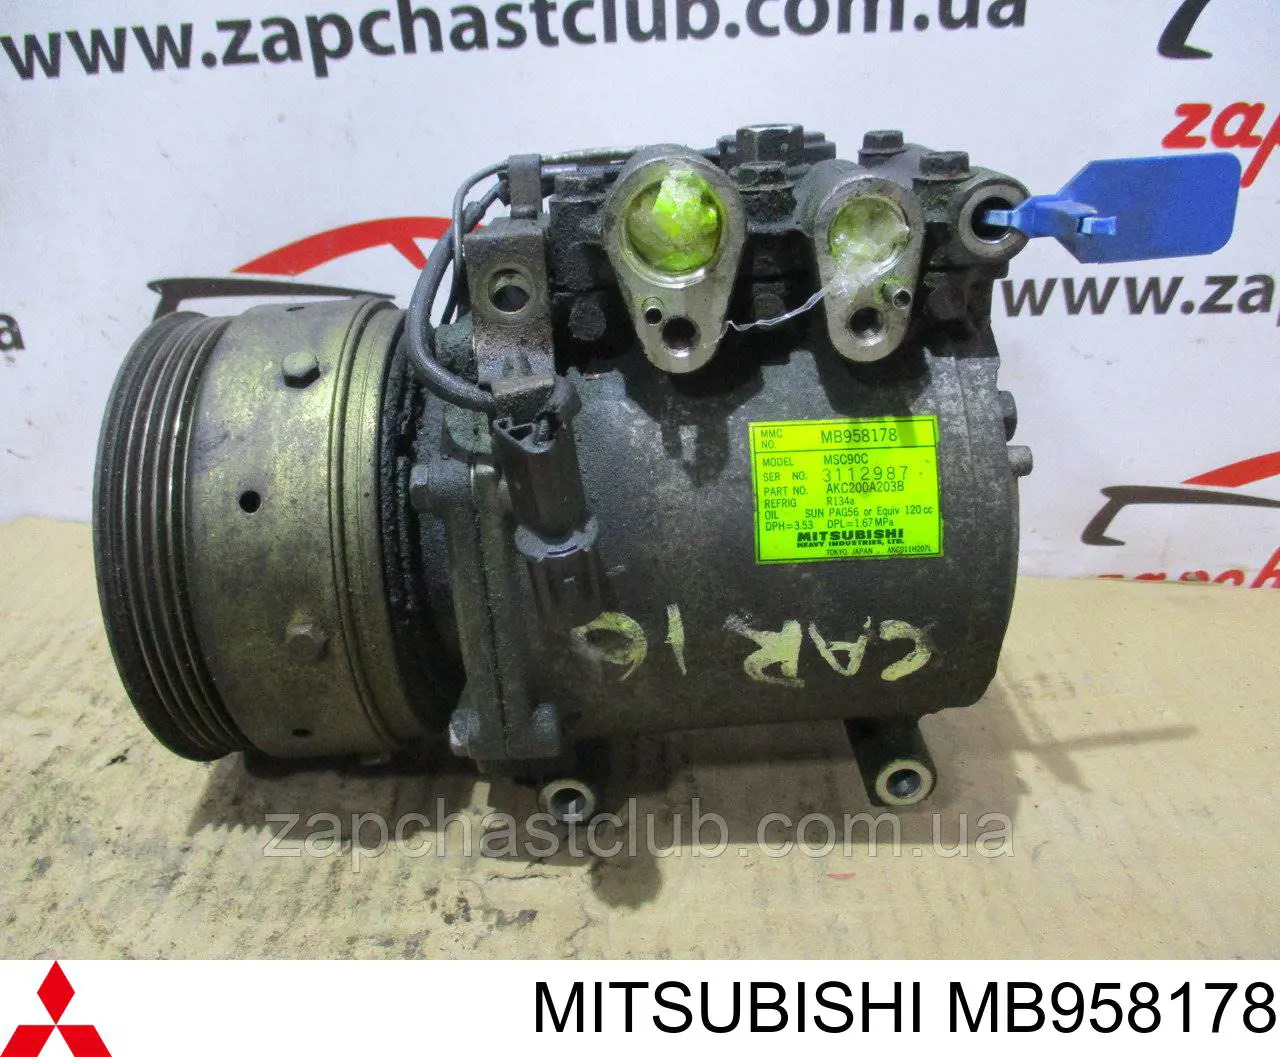 MB958178 Mitsubishi compressor de aparelho de ar condicionado